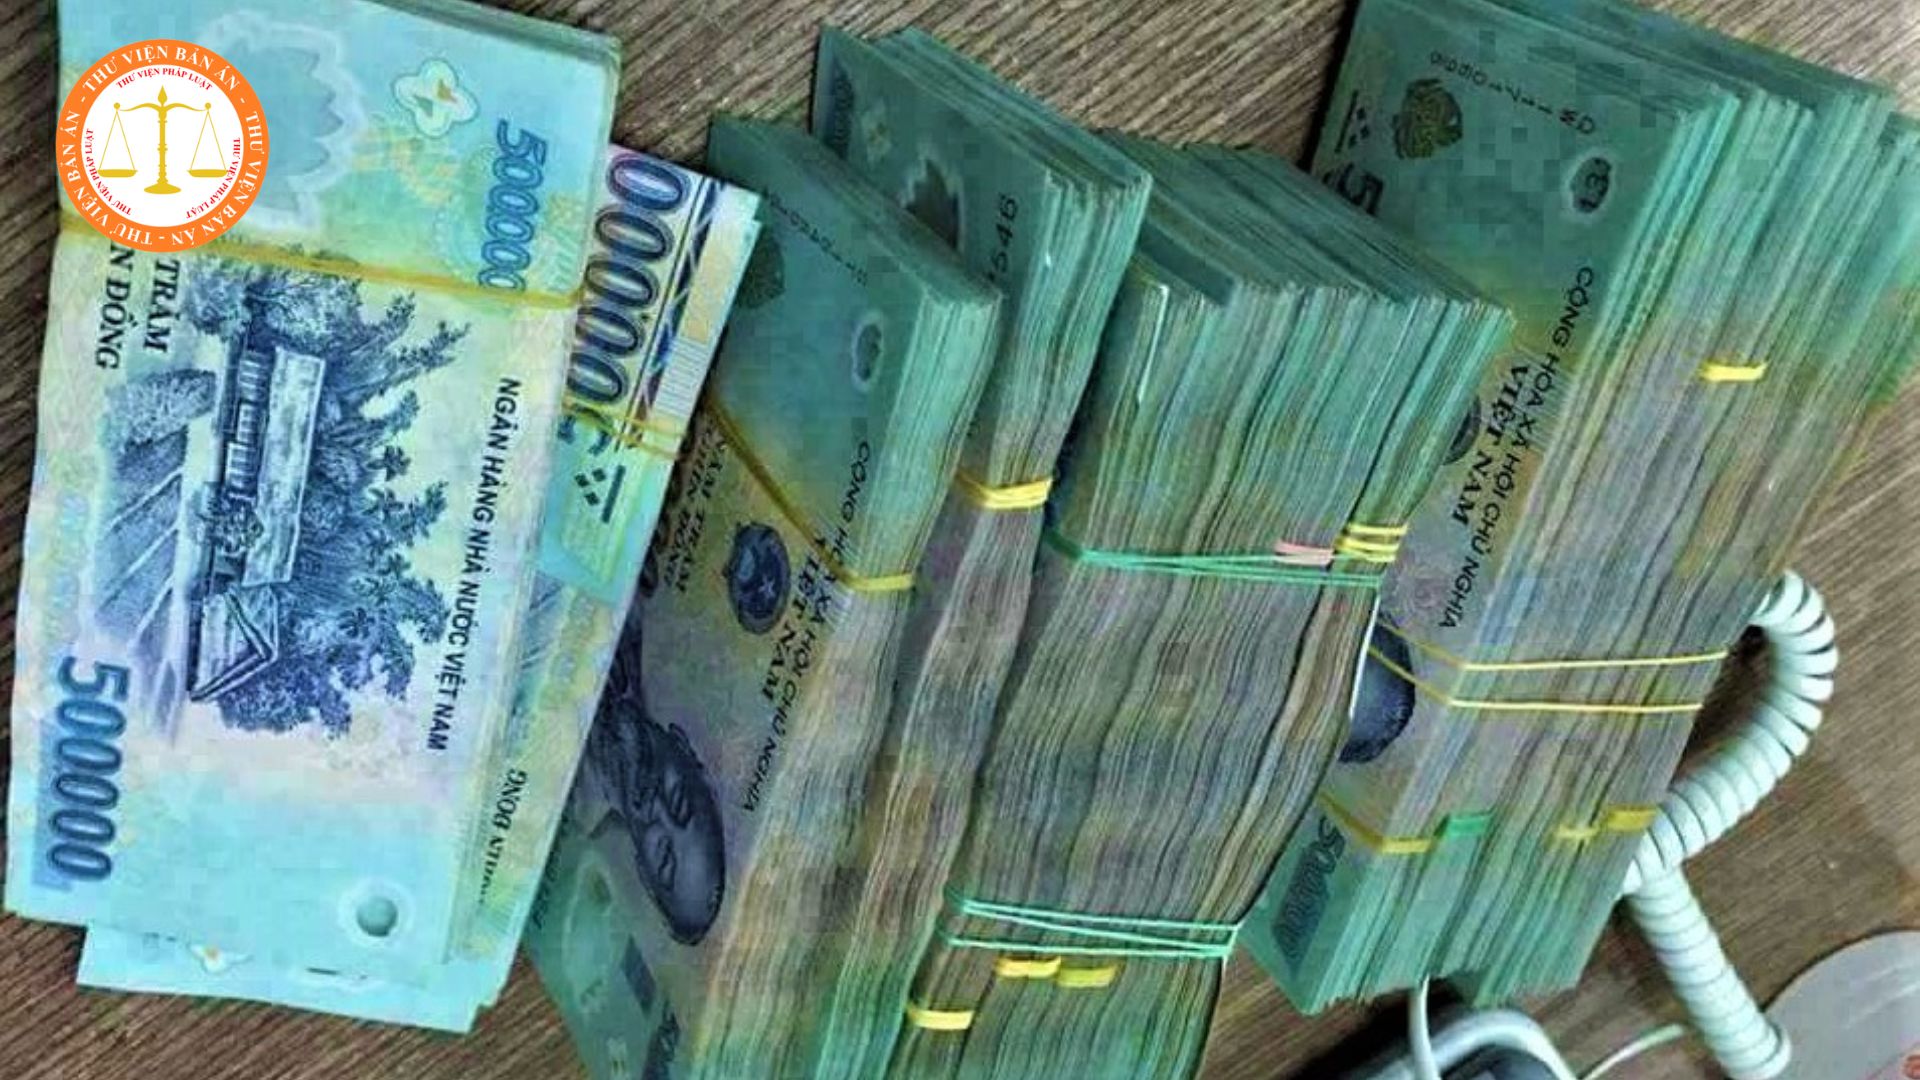 Beware of tricks to consume counterfeit money during Tet in Vietnam